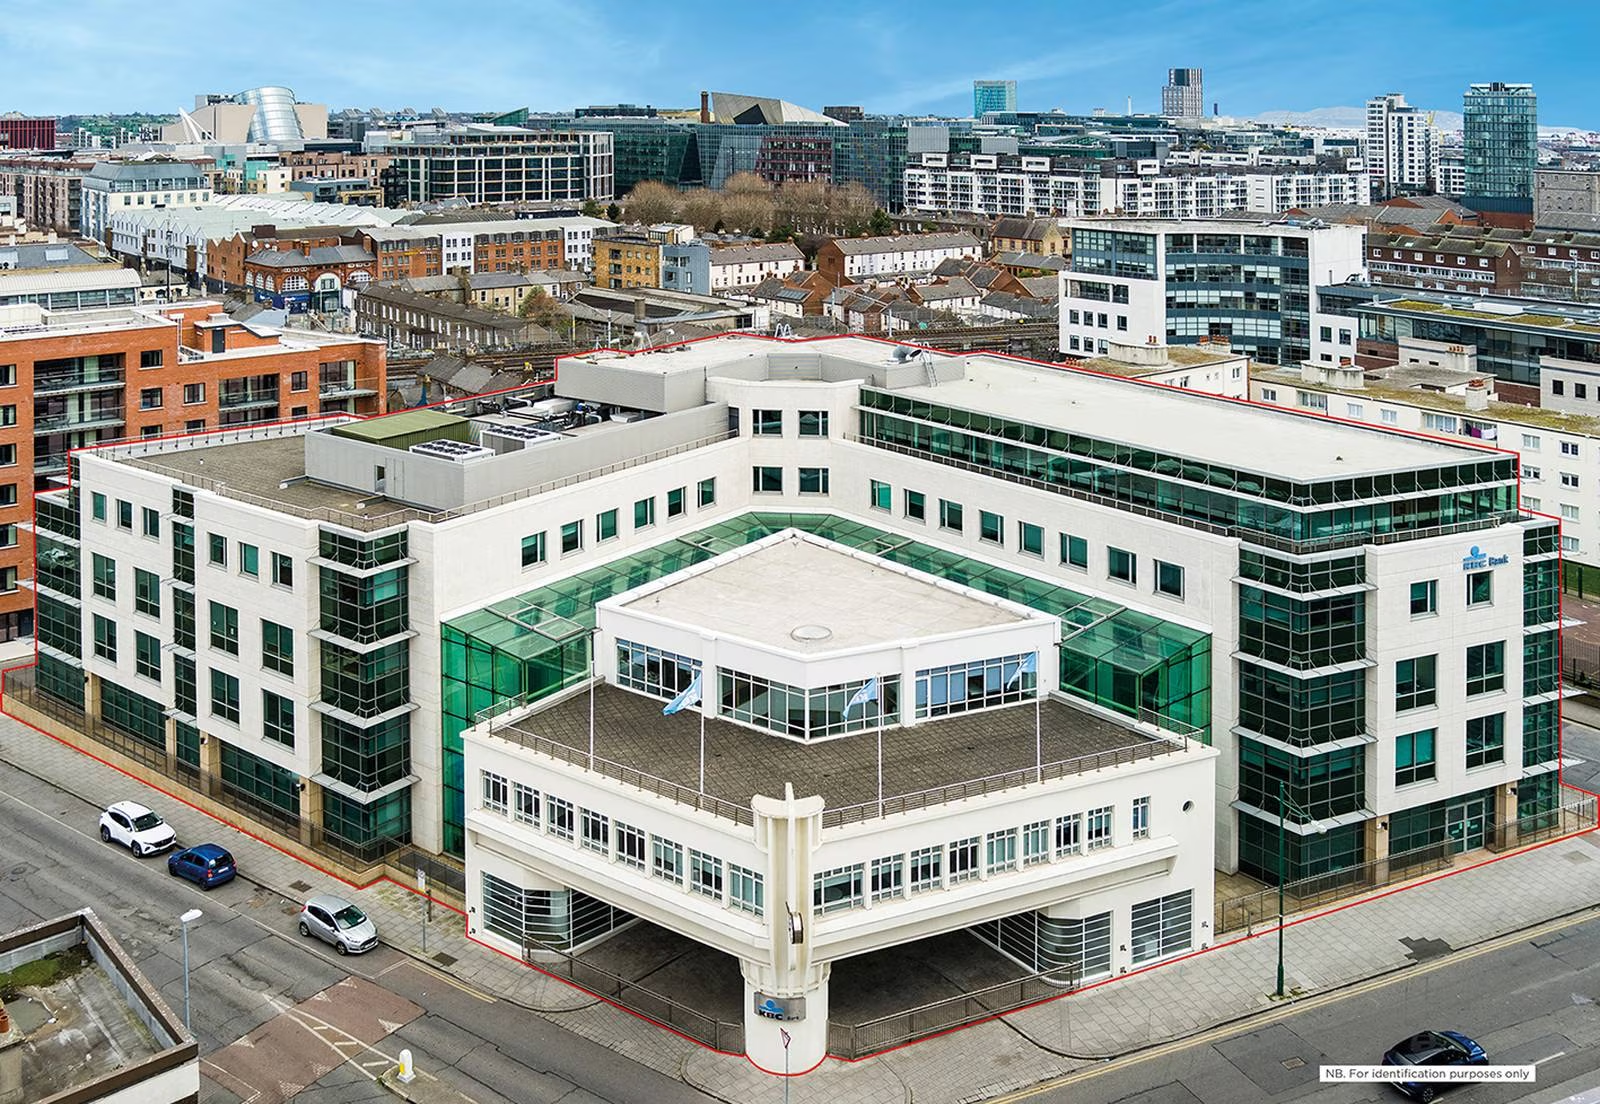 KBC seeks occupier for landmark Dublin headquarters as part of exit from Irish market.